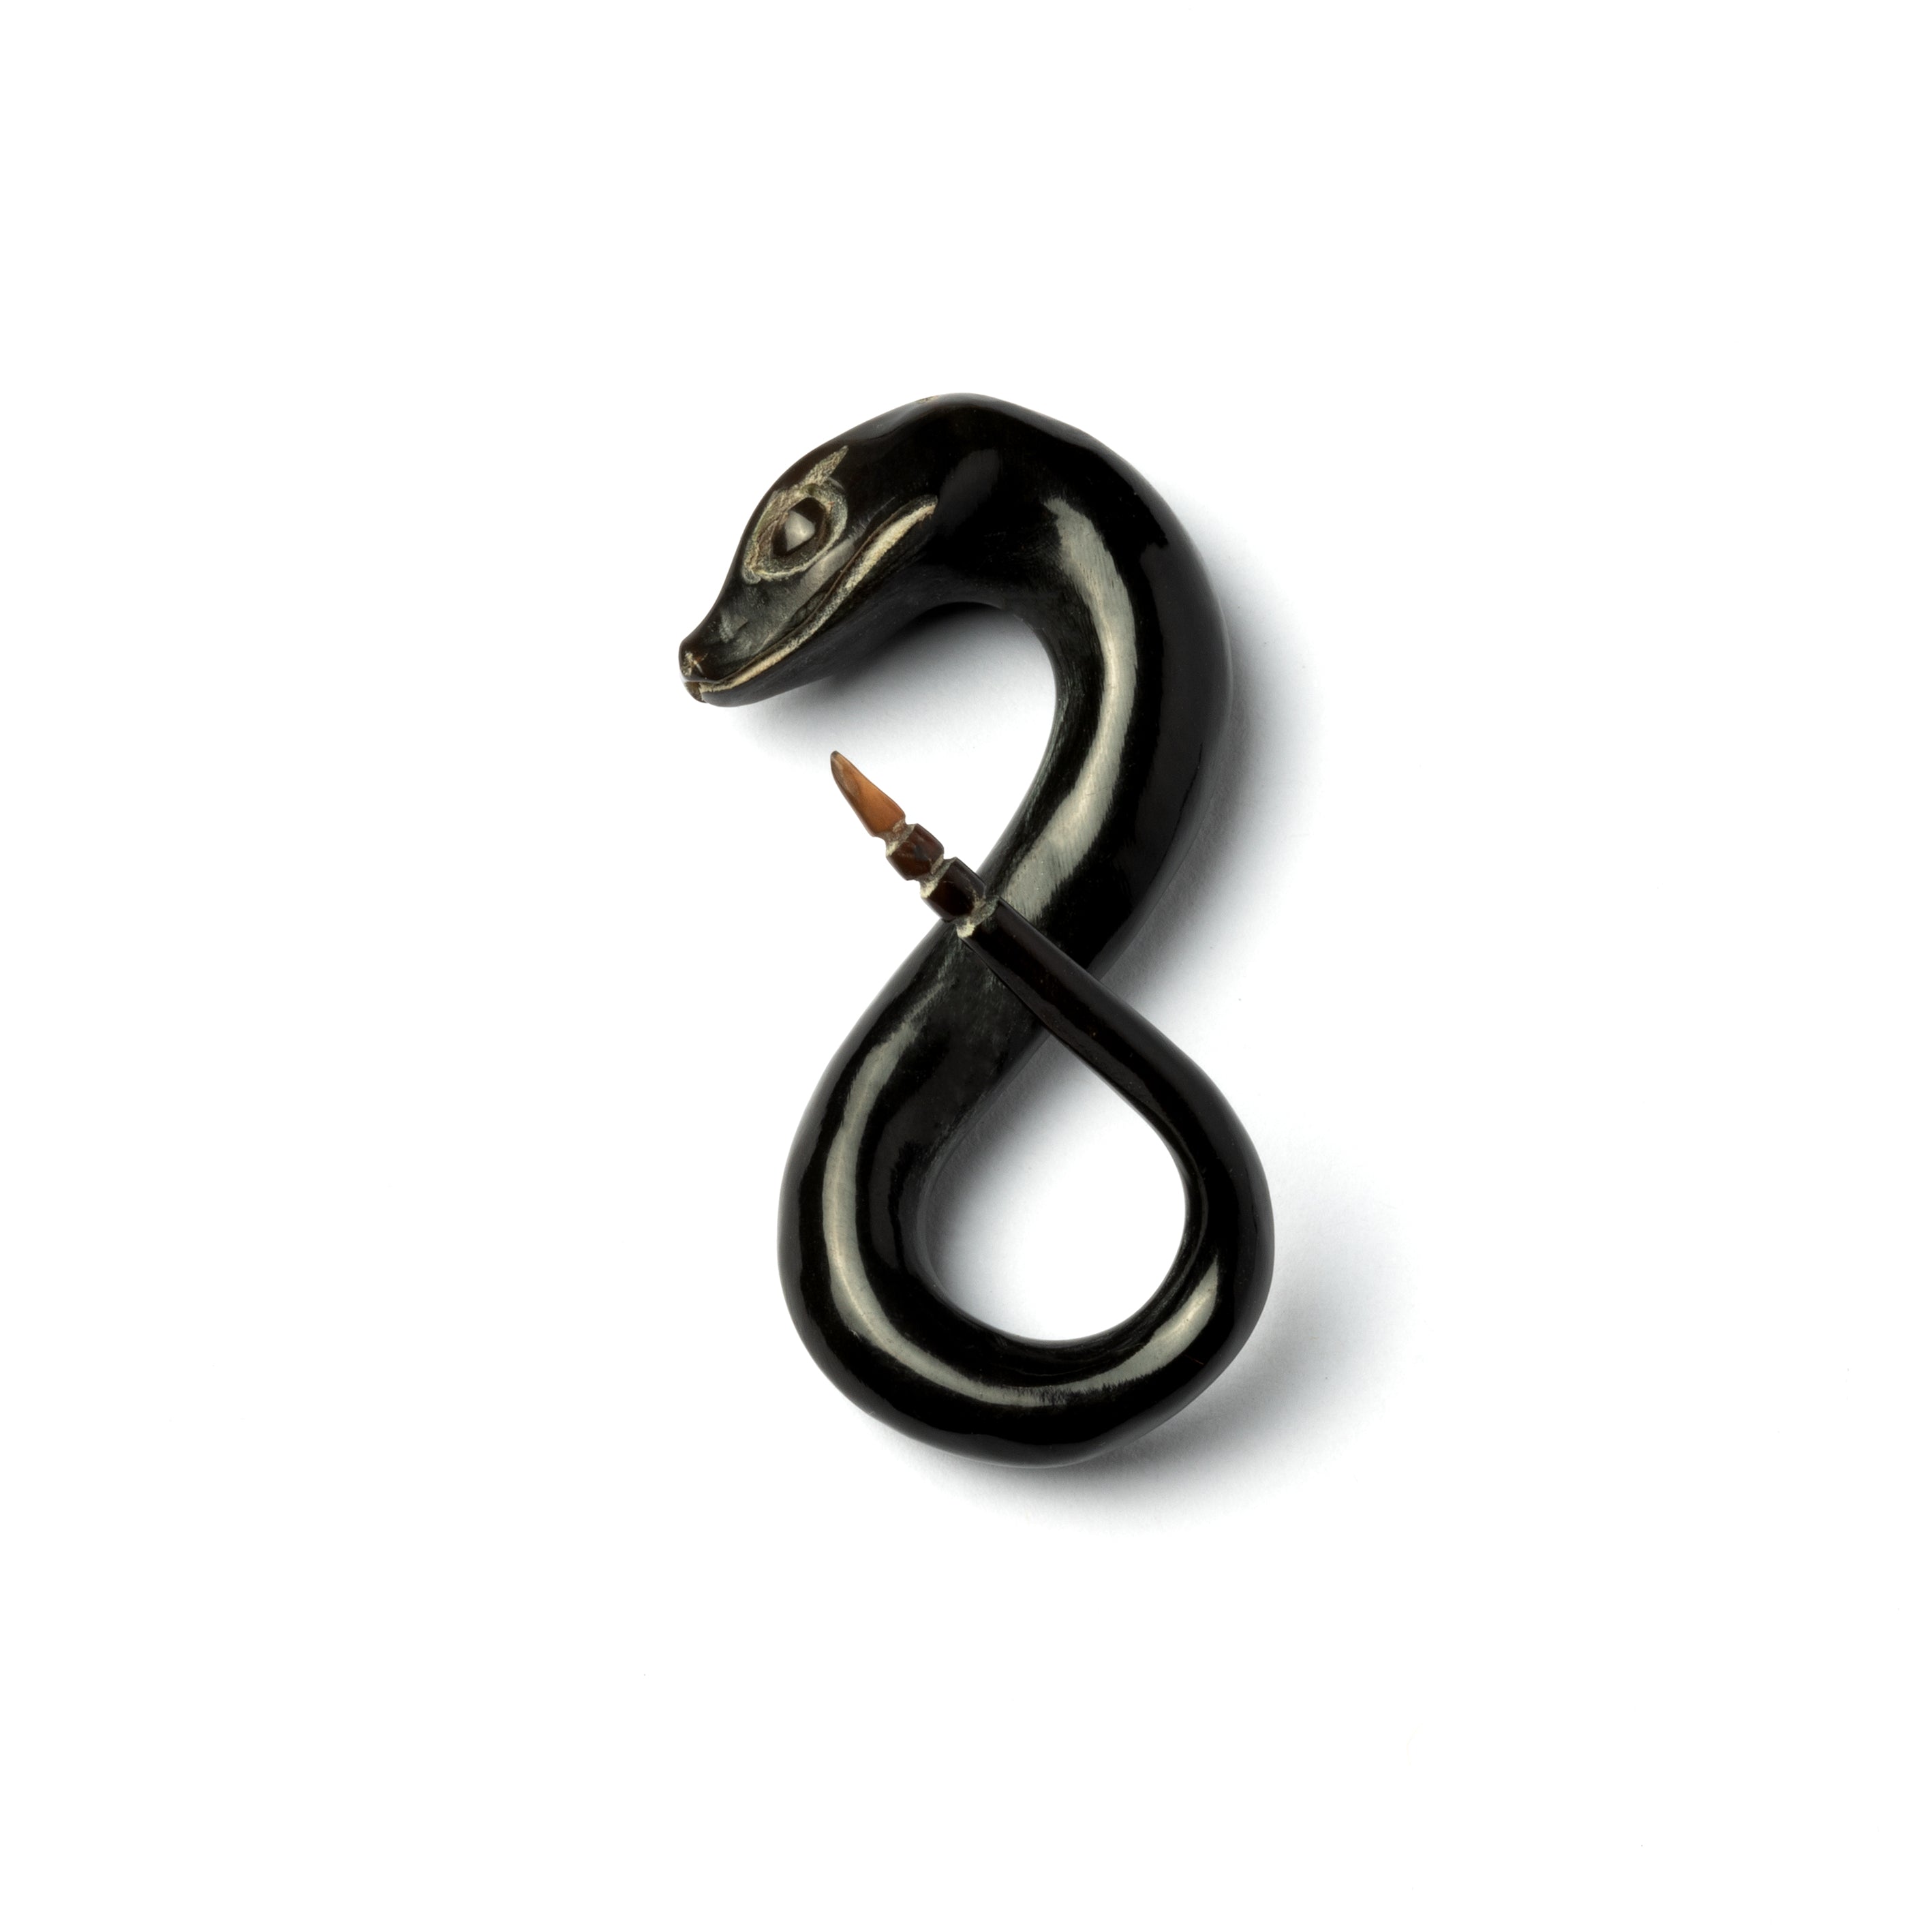 single horn snake ear stretcher in infinity shape side view